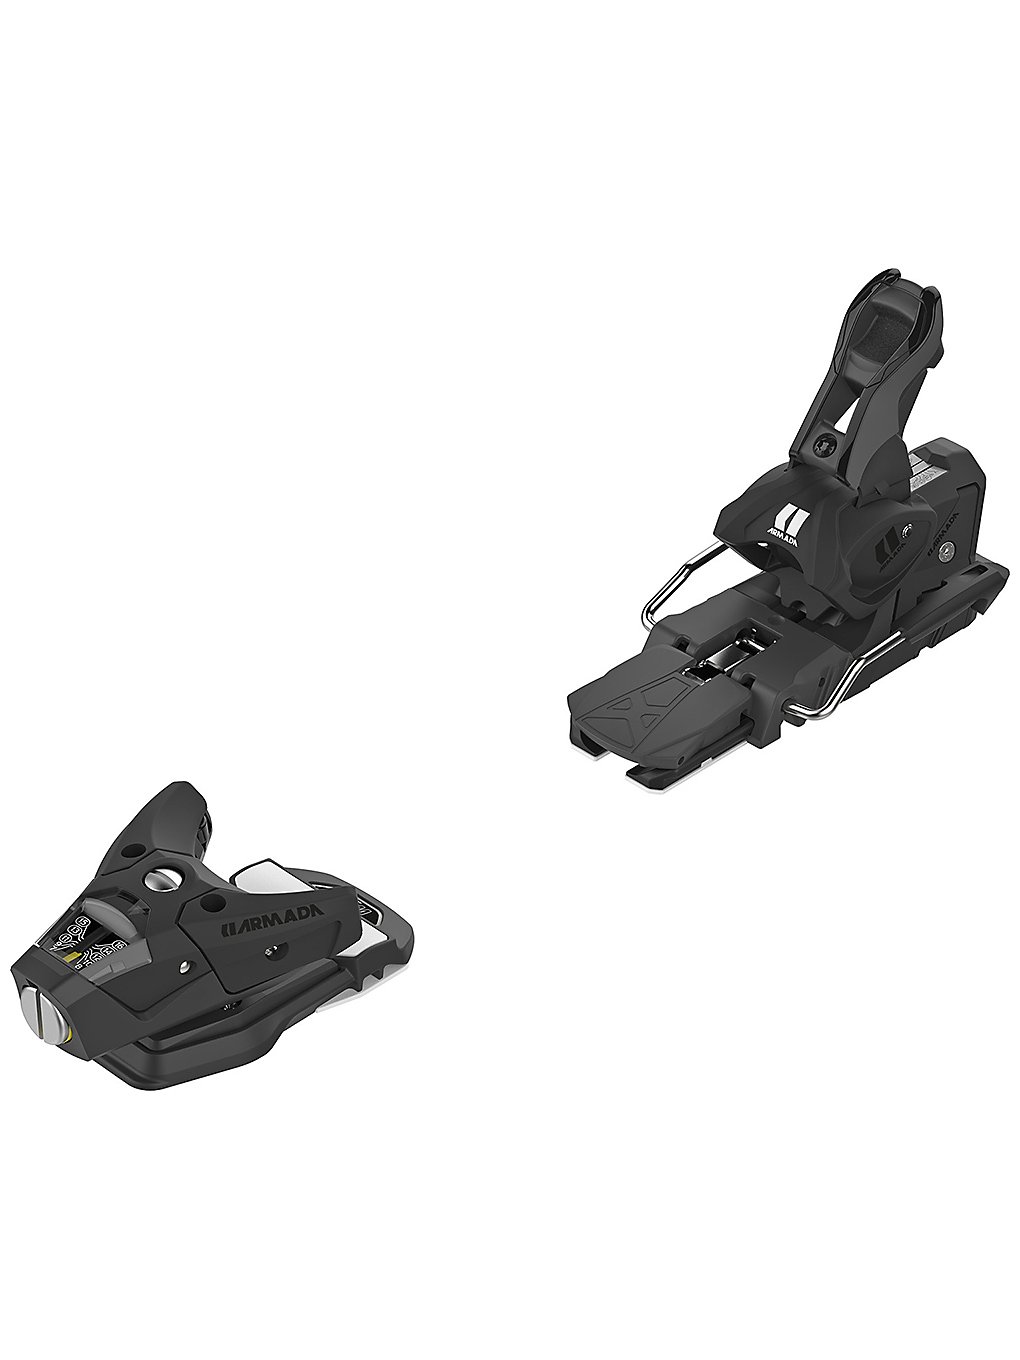 Armada N Tracer Tour G 110mm 2021 Ski Bindings black